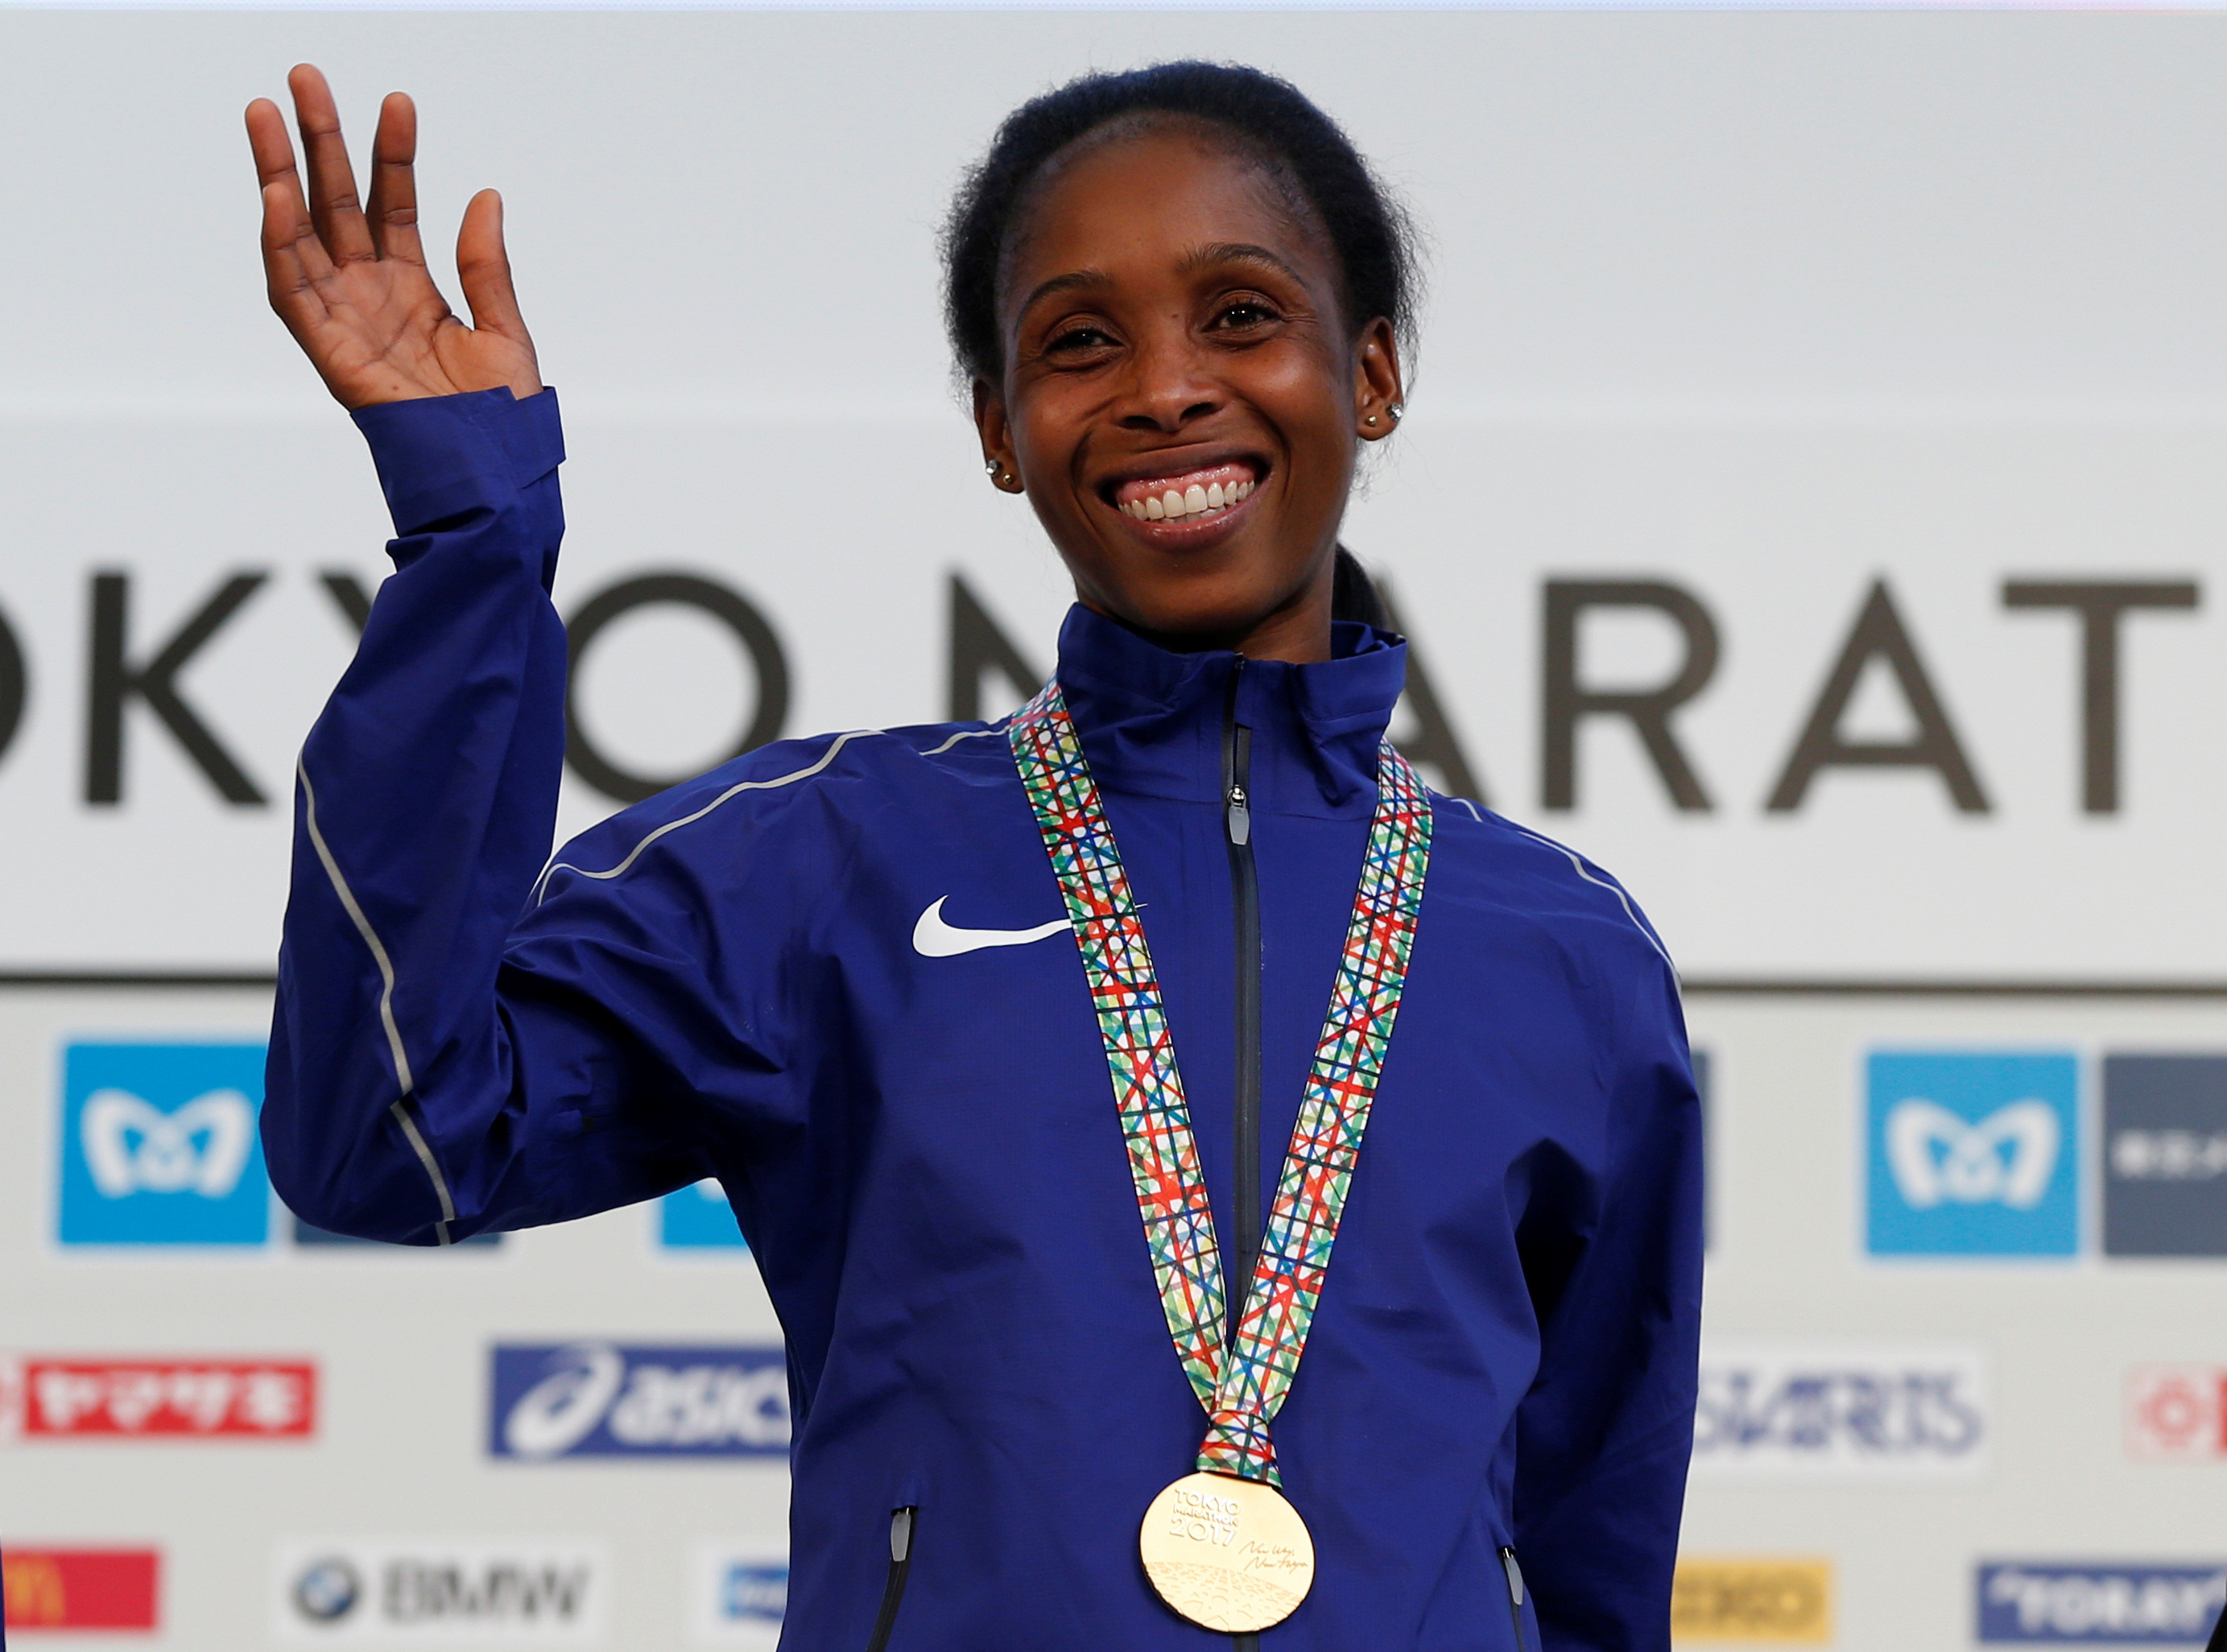 Kenya's Sarah Chepchirchir gets 8-year ban for second doping violation